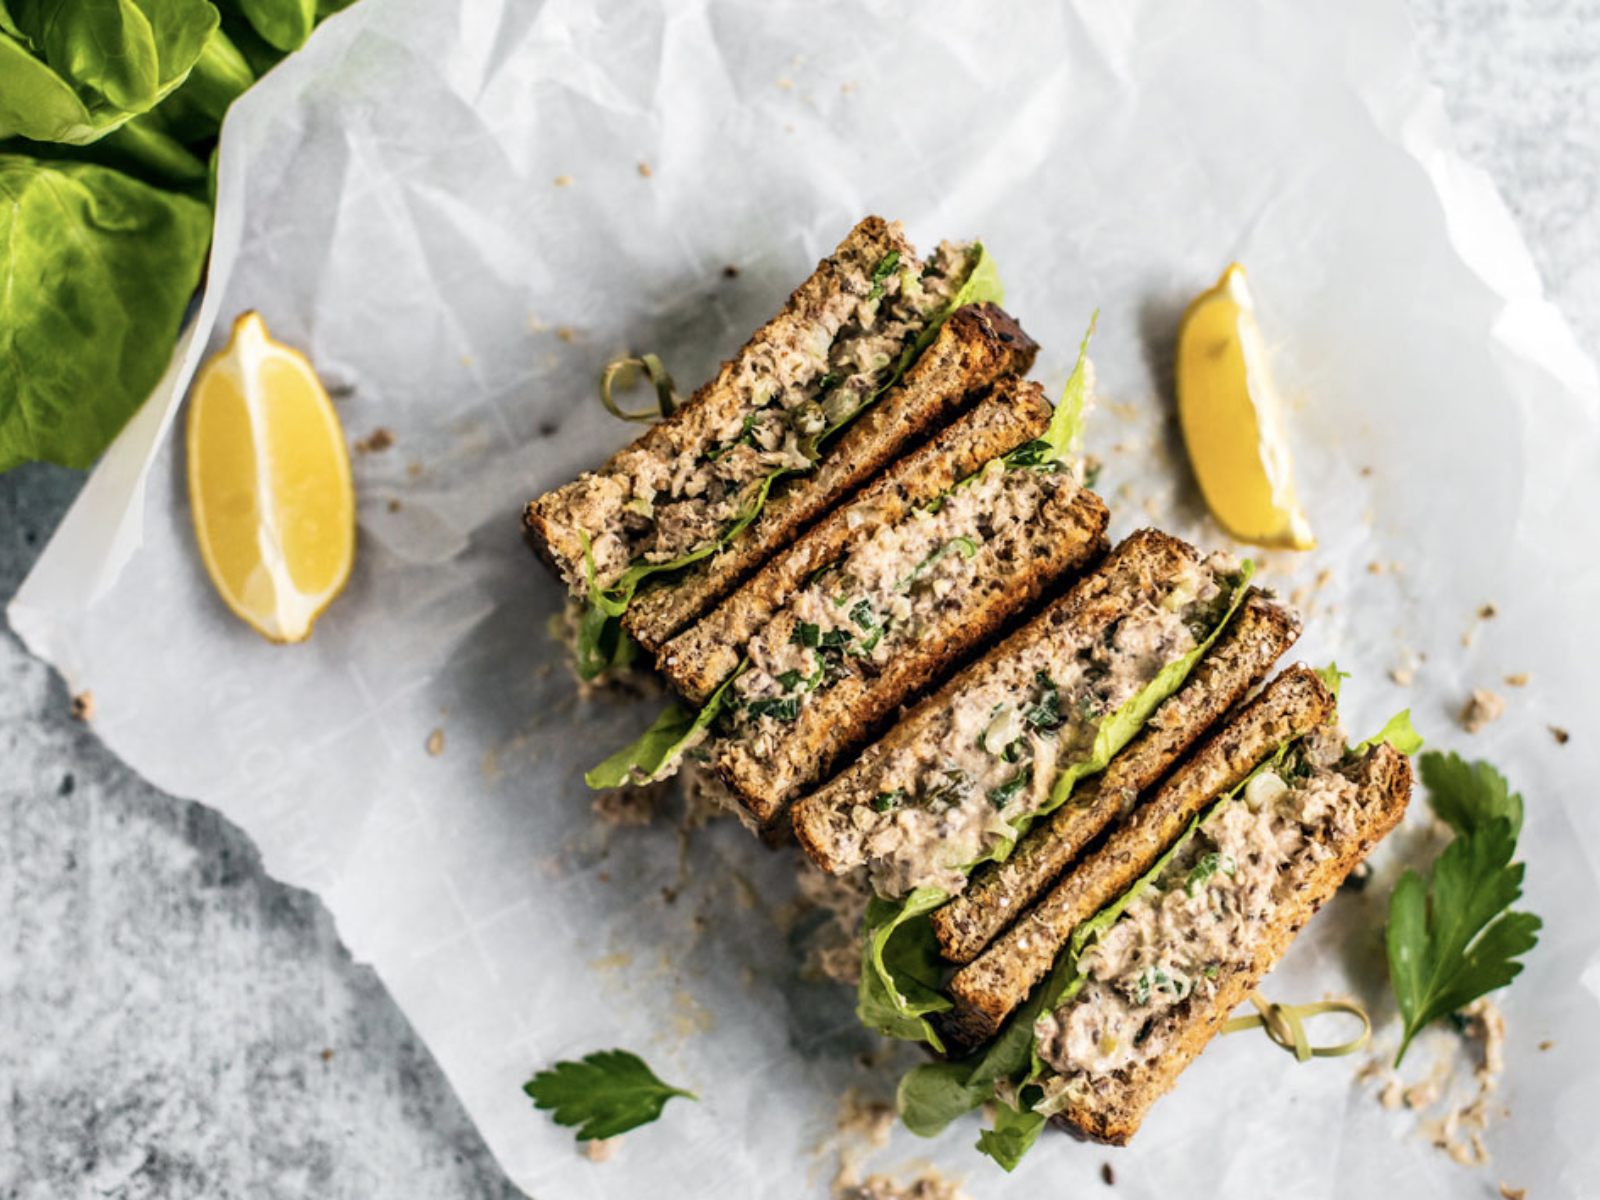 spicy sardine sandwich with lemon